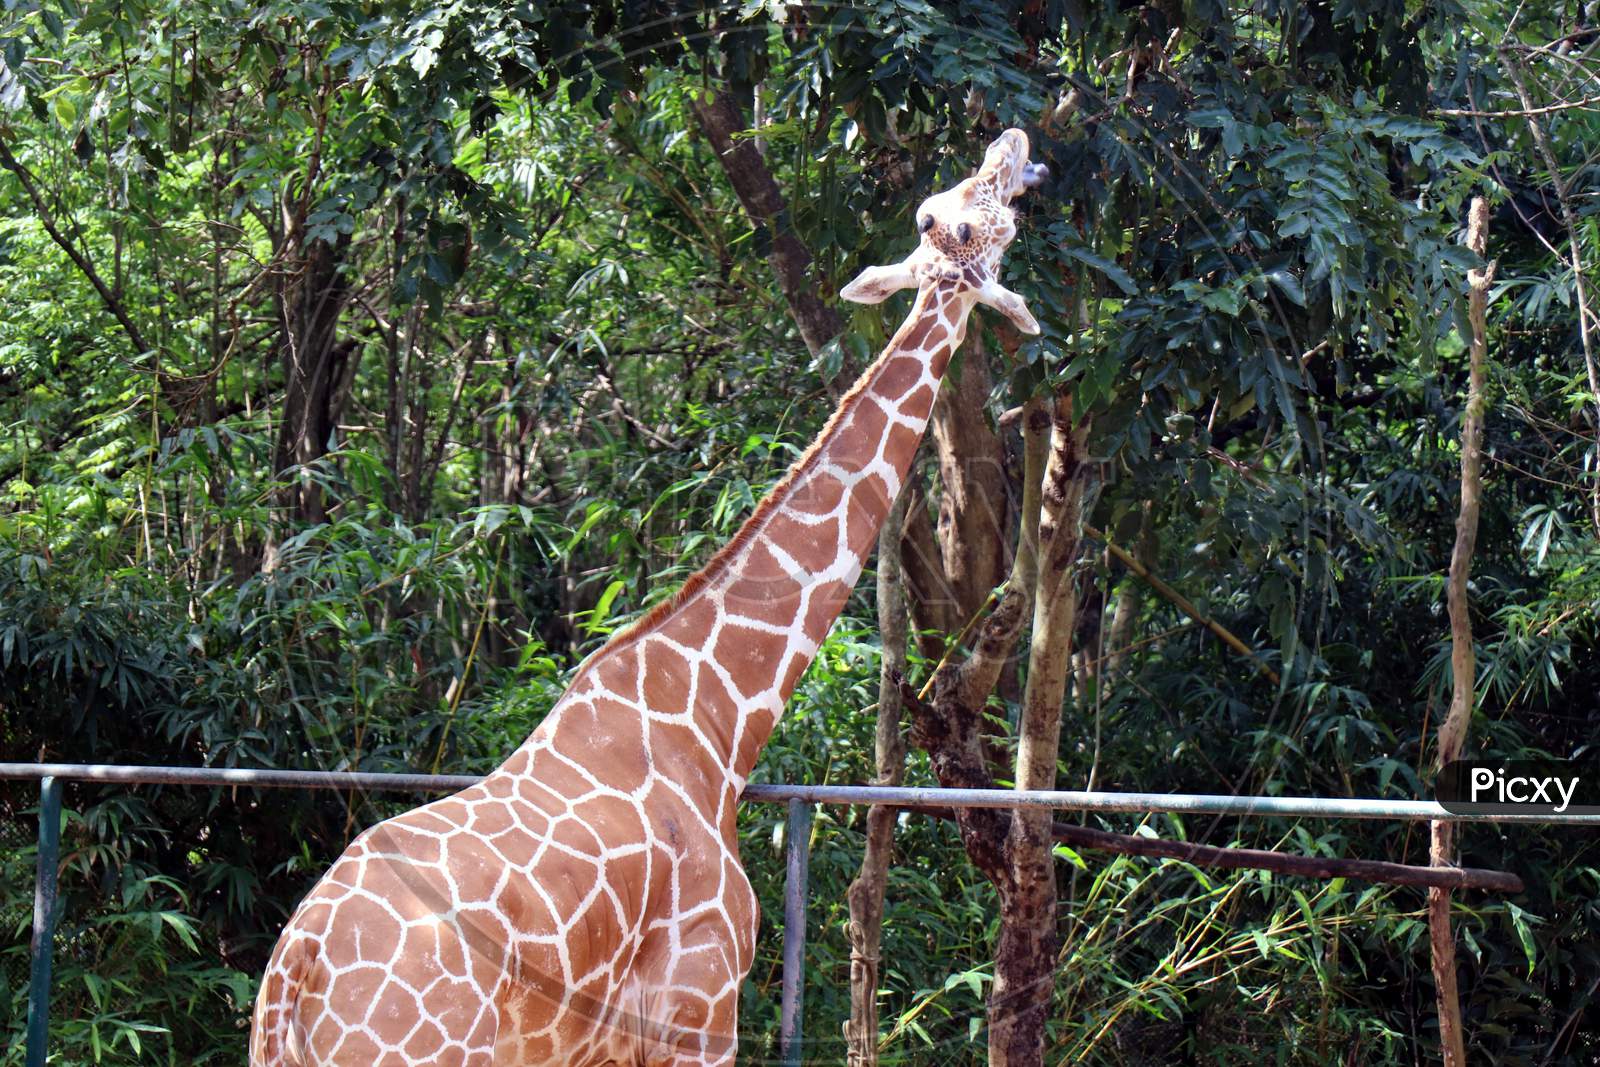 A Giraffe eating tree leaves in a Zoo